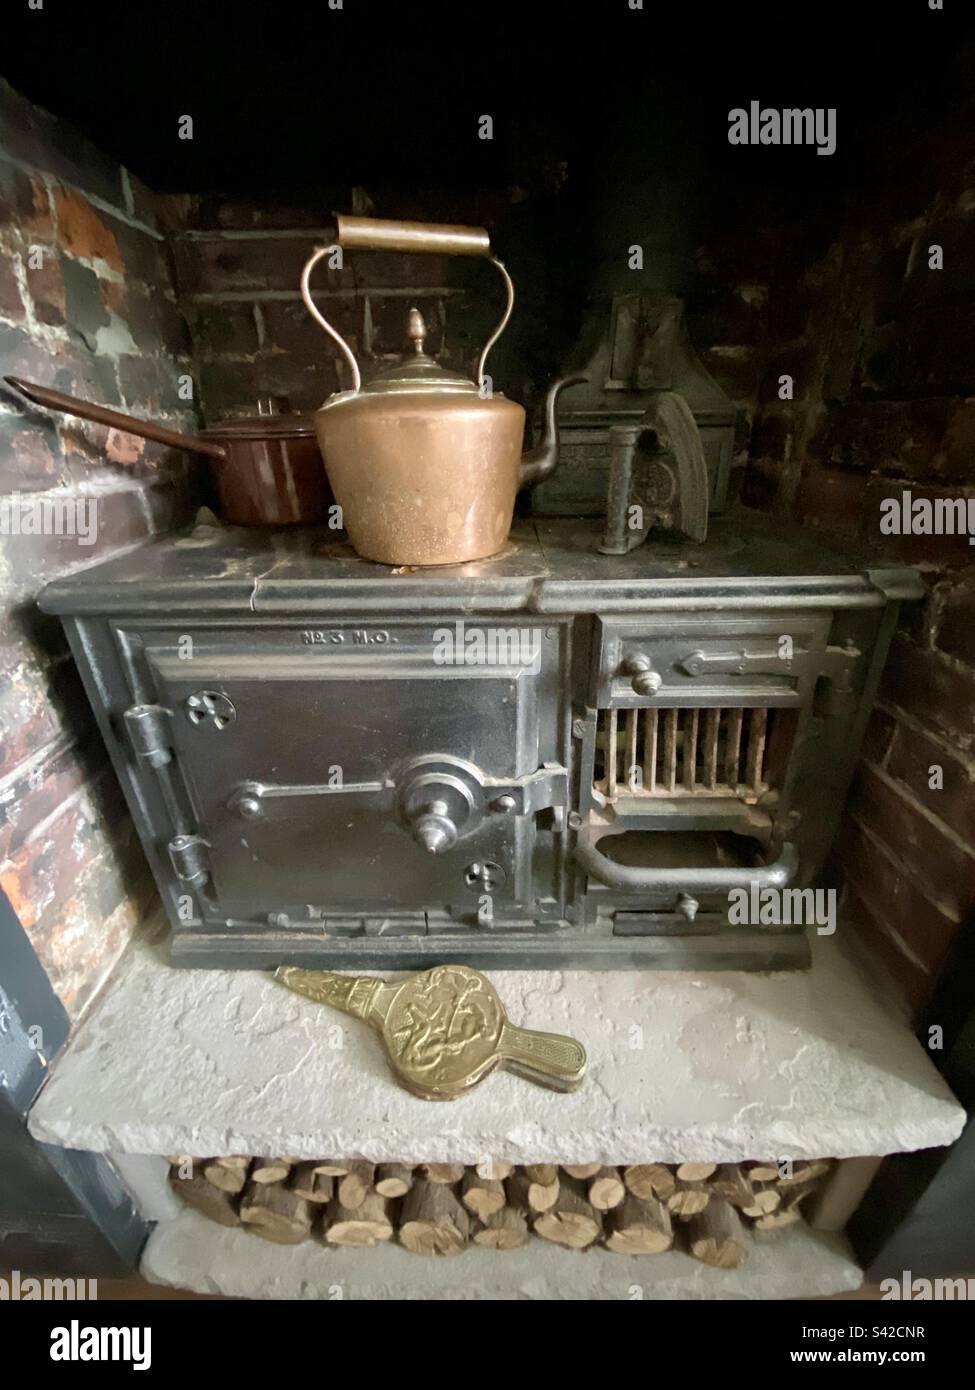 Edwardian cooking range nestled in inglenook fireplace Stock Photo